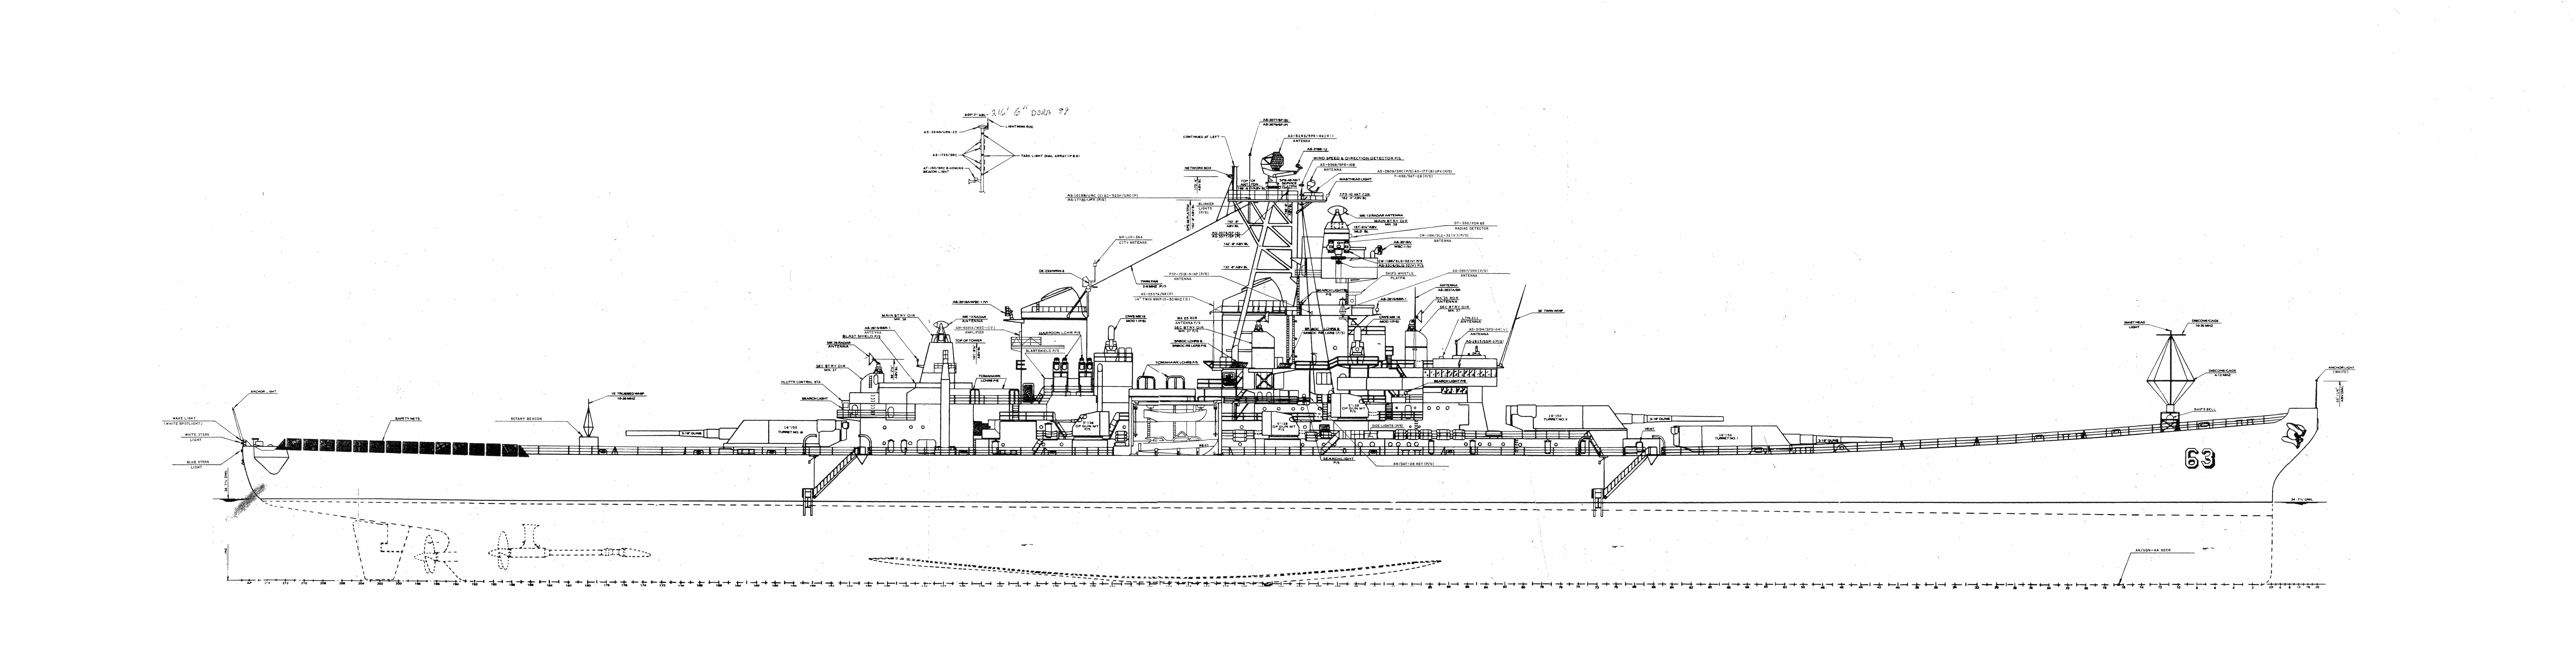 Battleship Blueprints And Plans